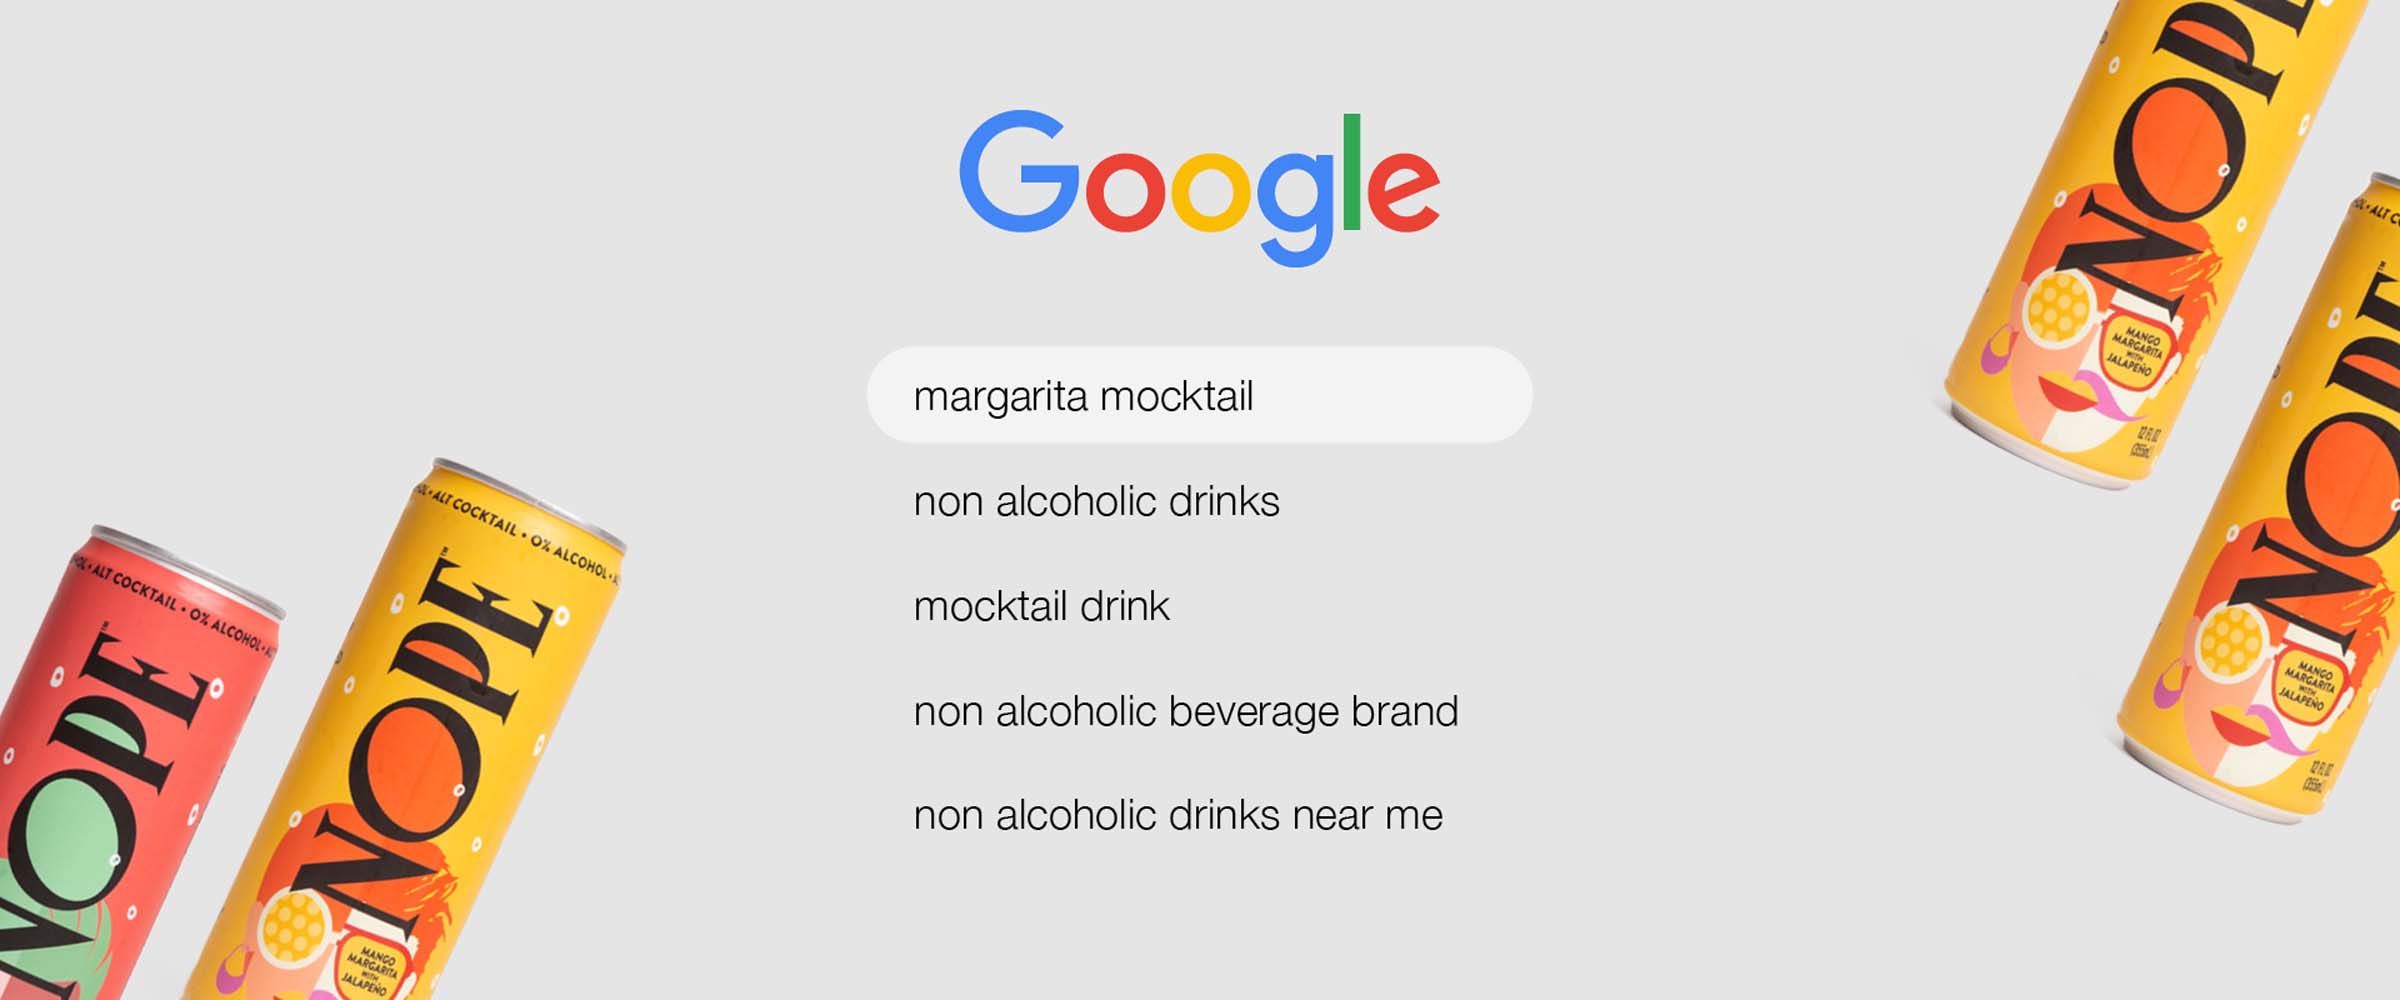 NOPE Beverages - Portfolio Image - Mock Google Search Keywords Example